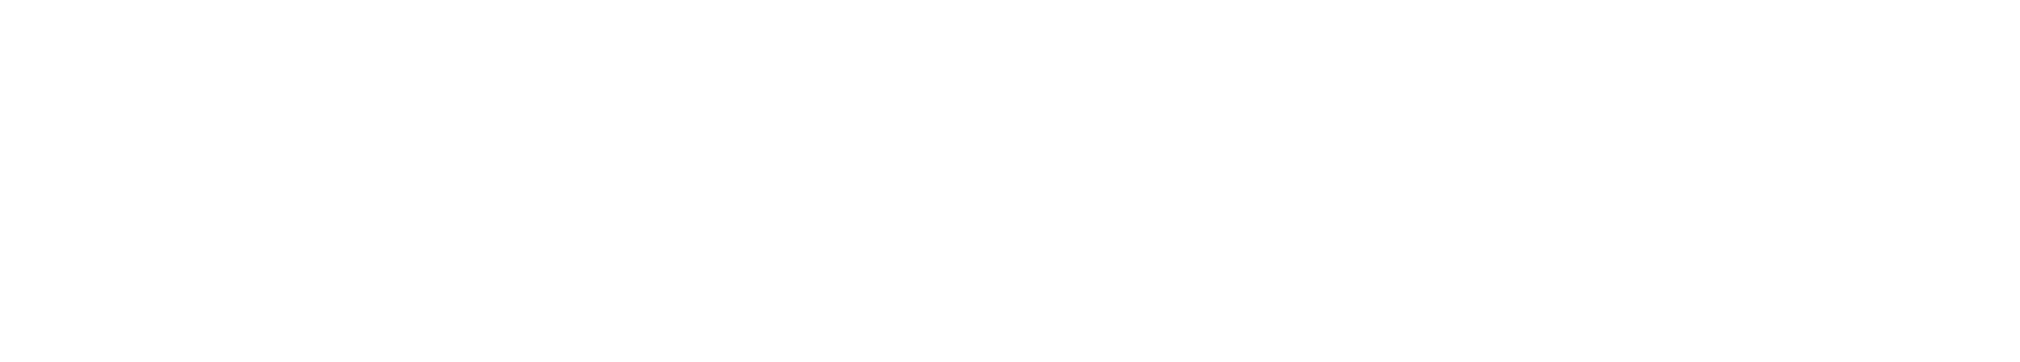 Neighbourly Logo